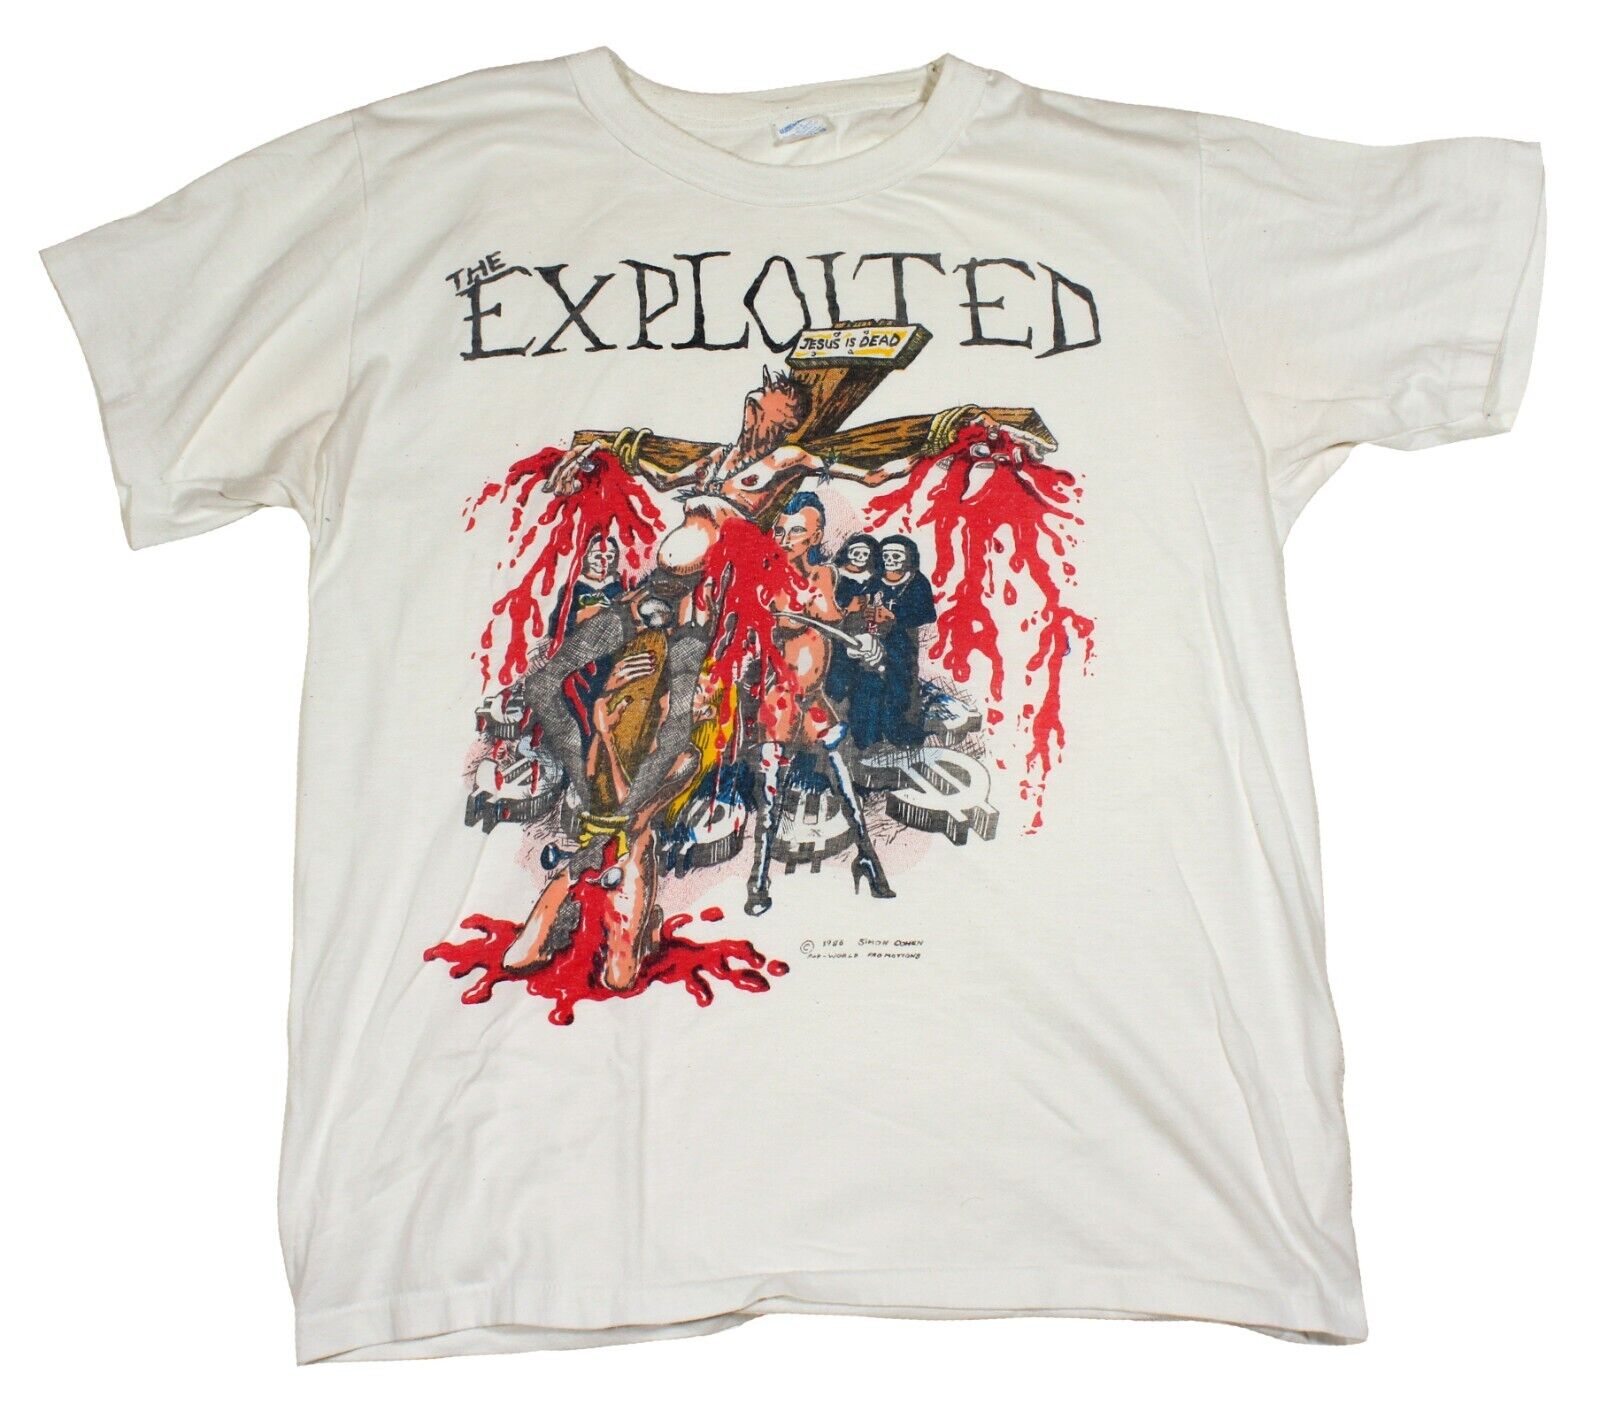 The Exploited - Jesus is Dead Original Vintage T-Shirt 1986